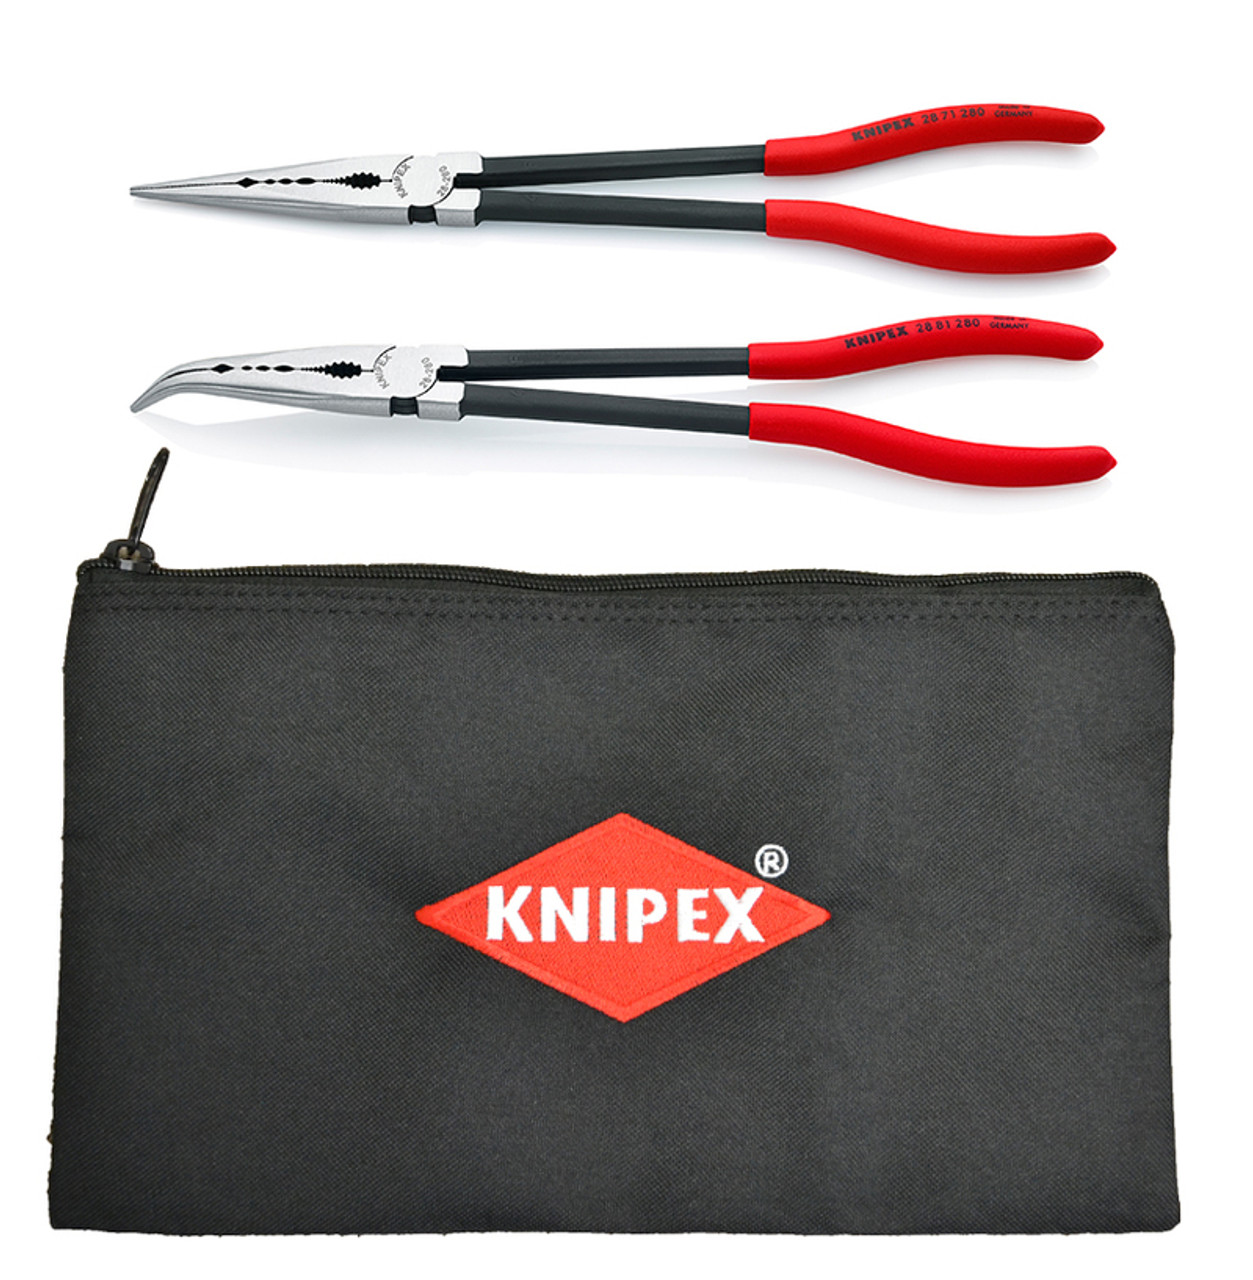 Knipex 9k 00 80 12 US - 3 PC Long Nose Tool Set